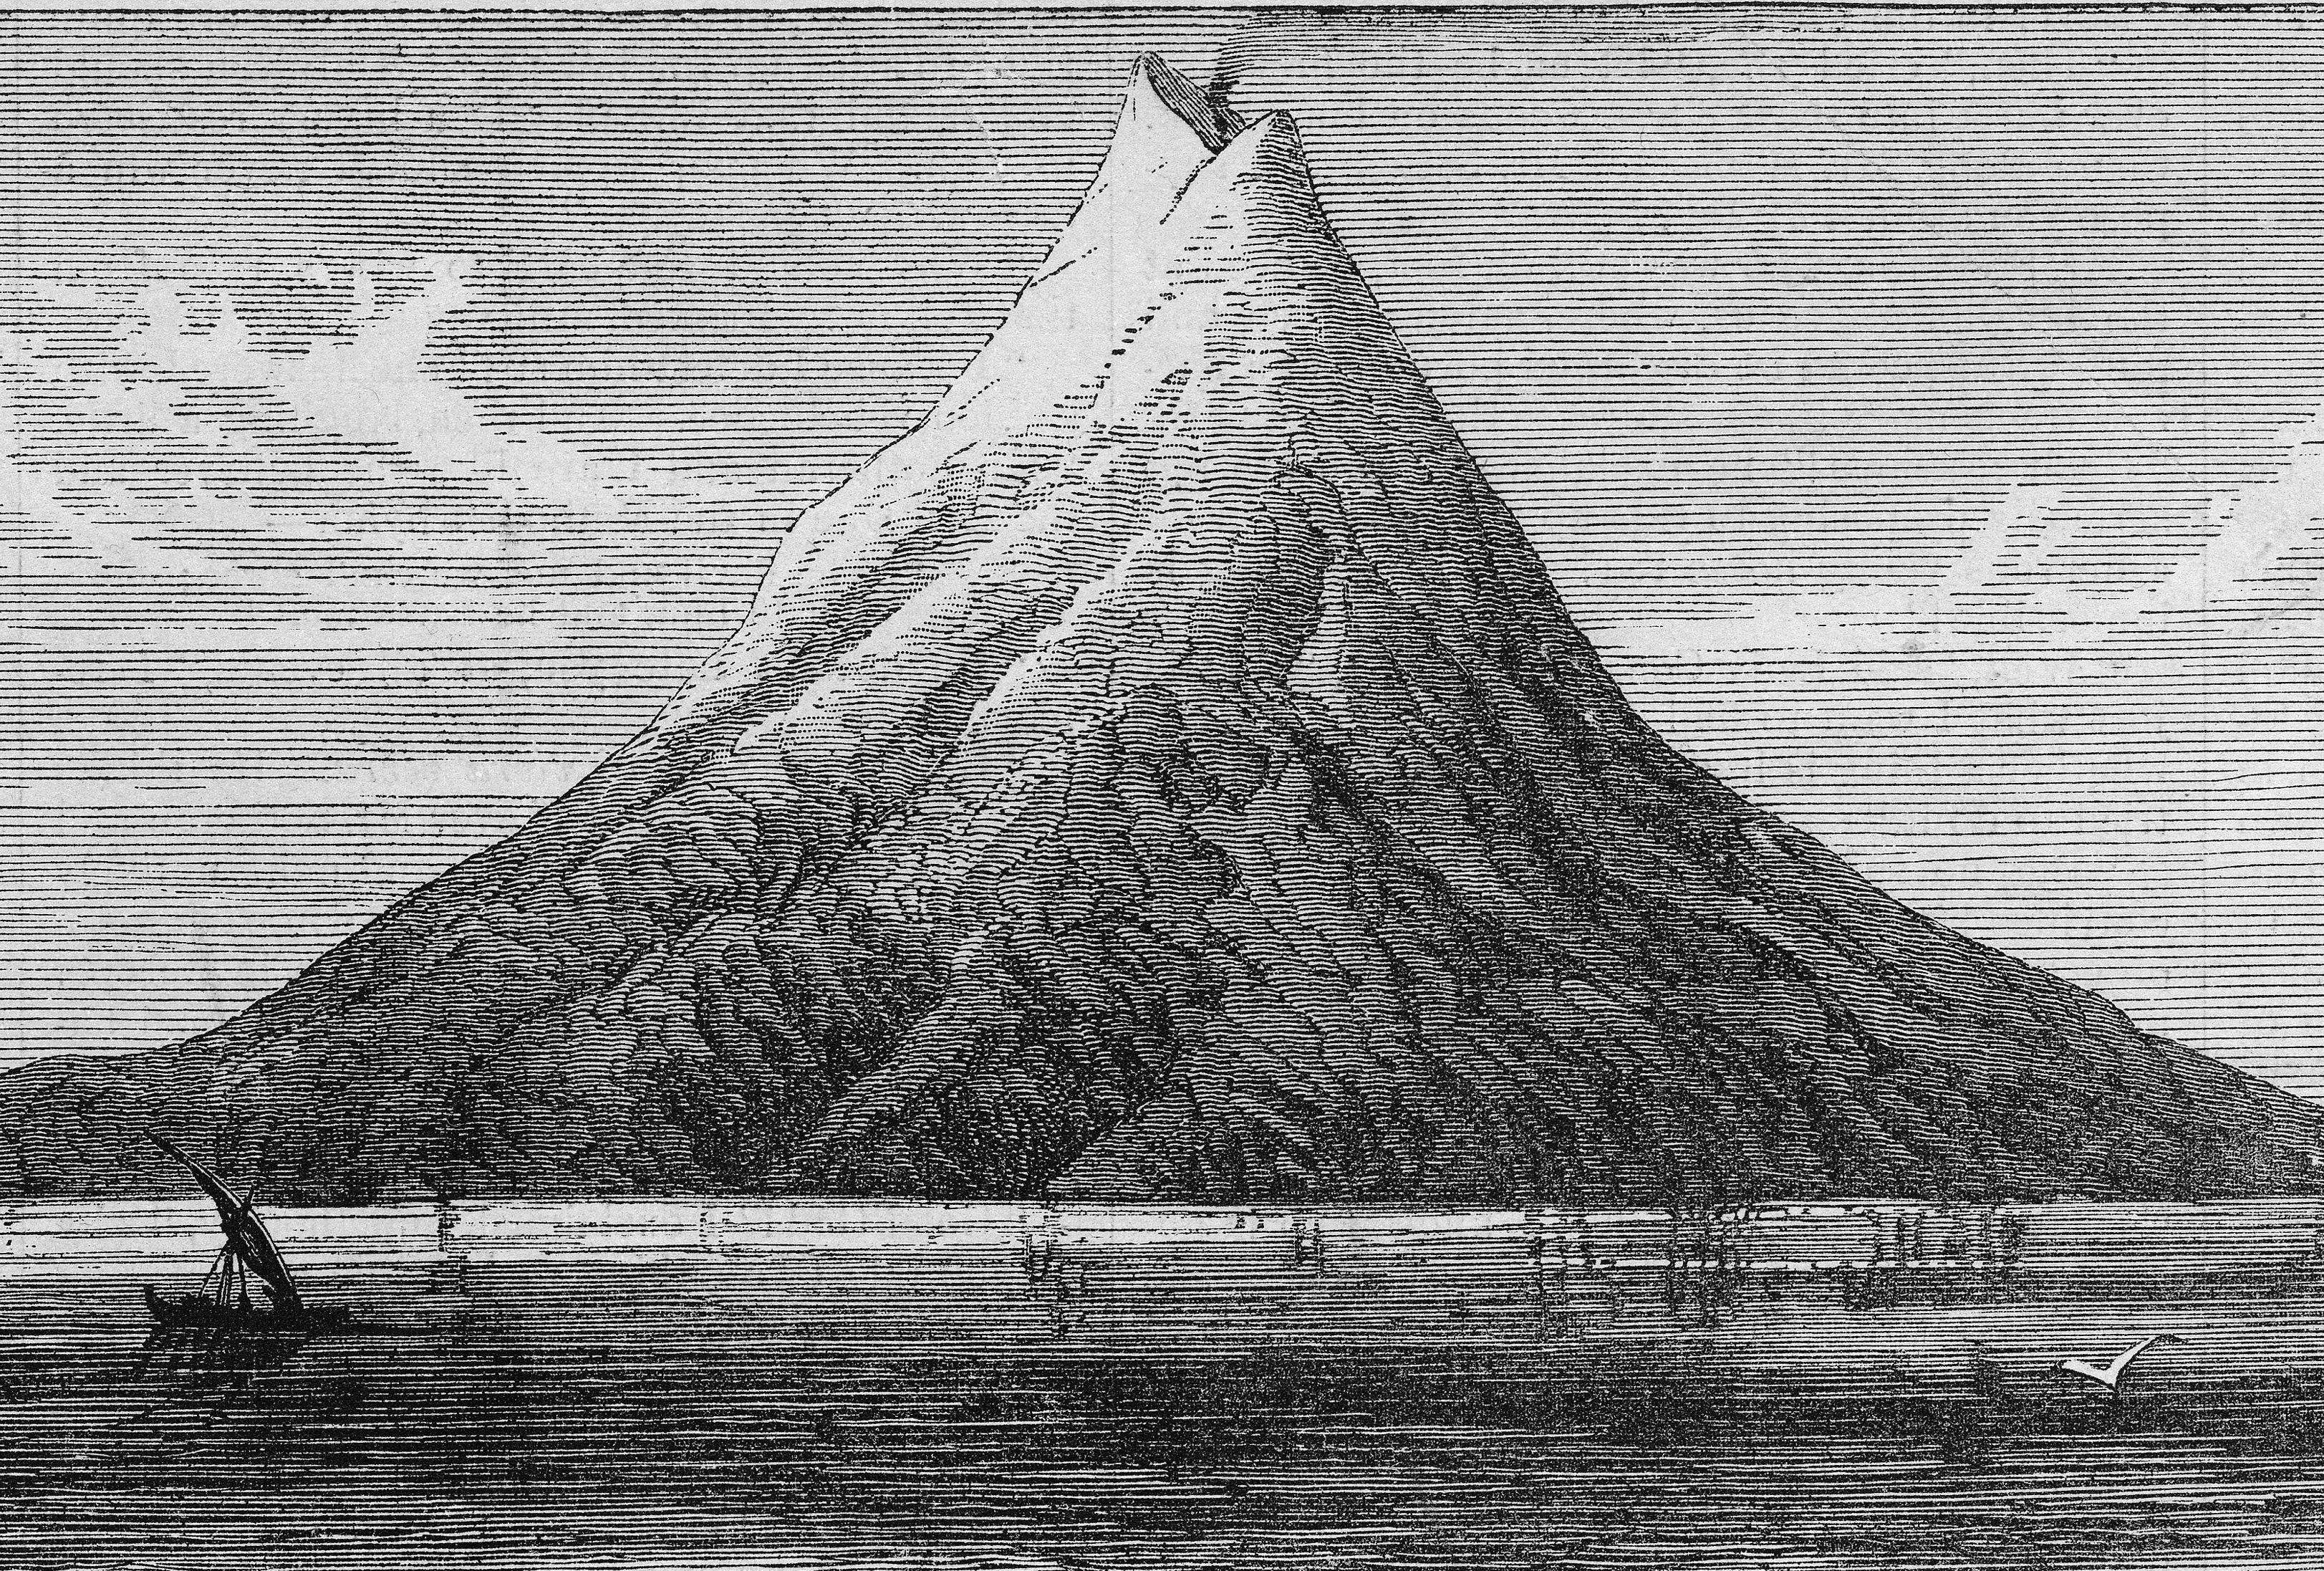 Krakatoa Volcano Eruption of 1883